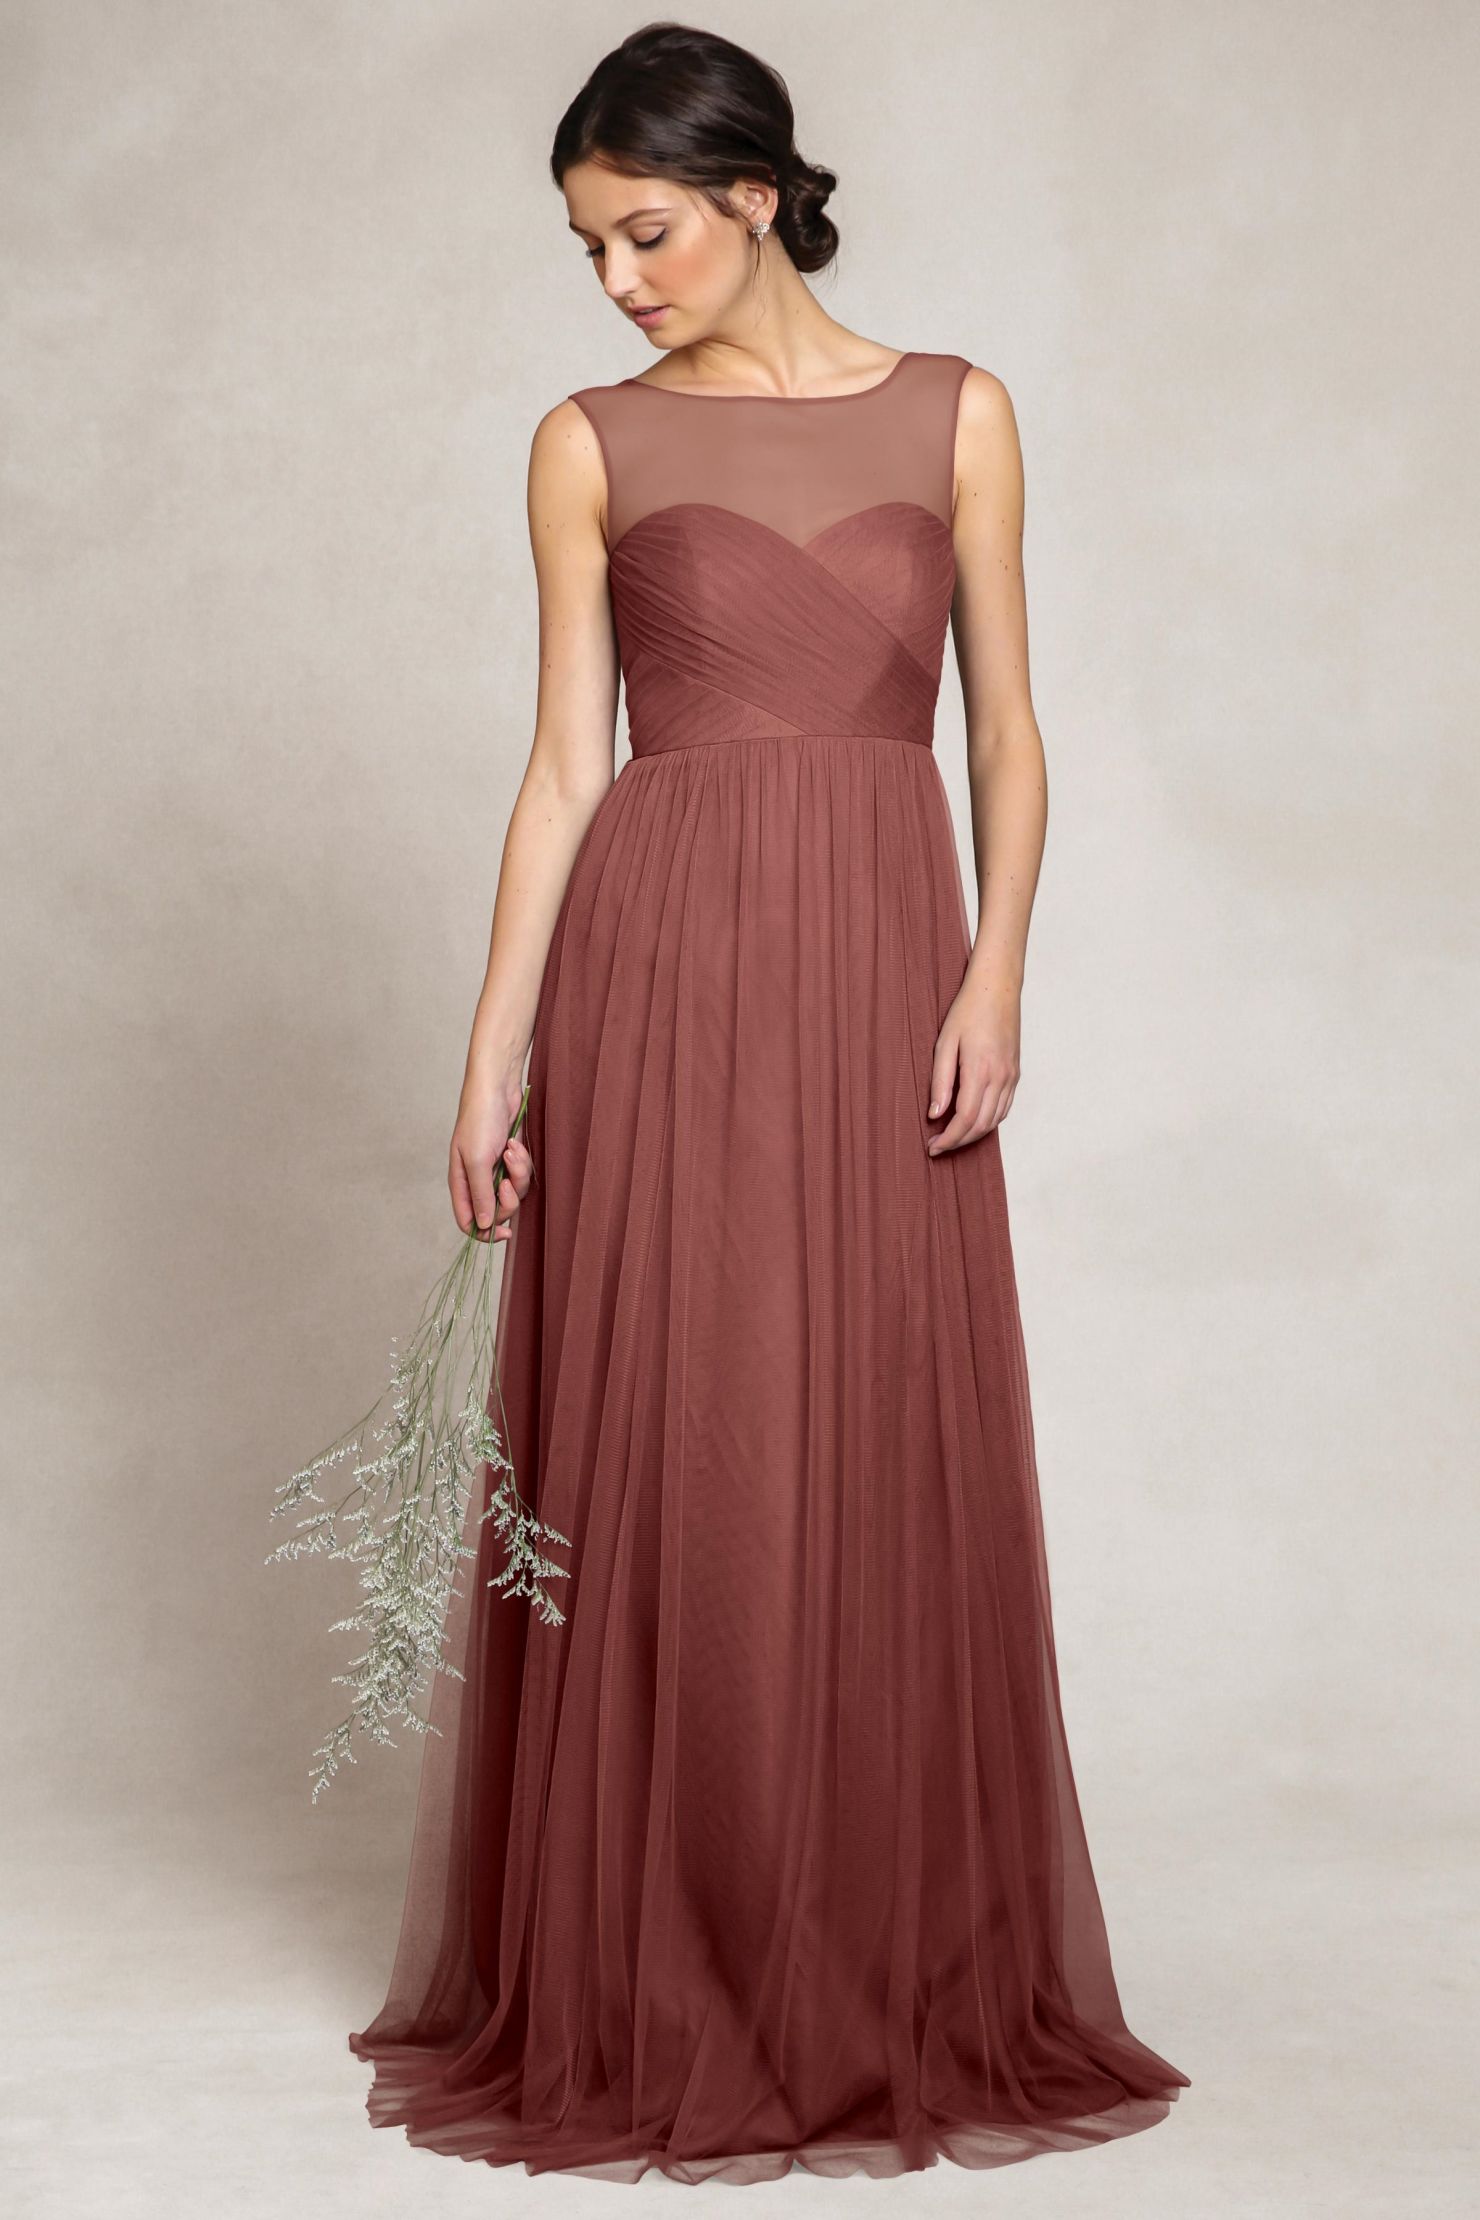 bridesmaid dresses cinnamon rose